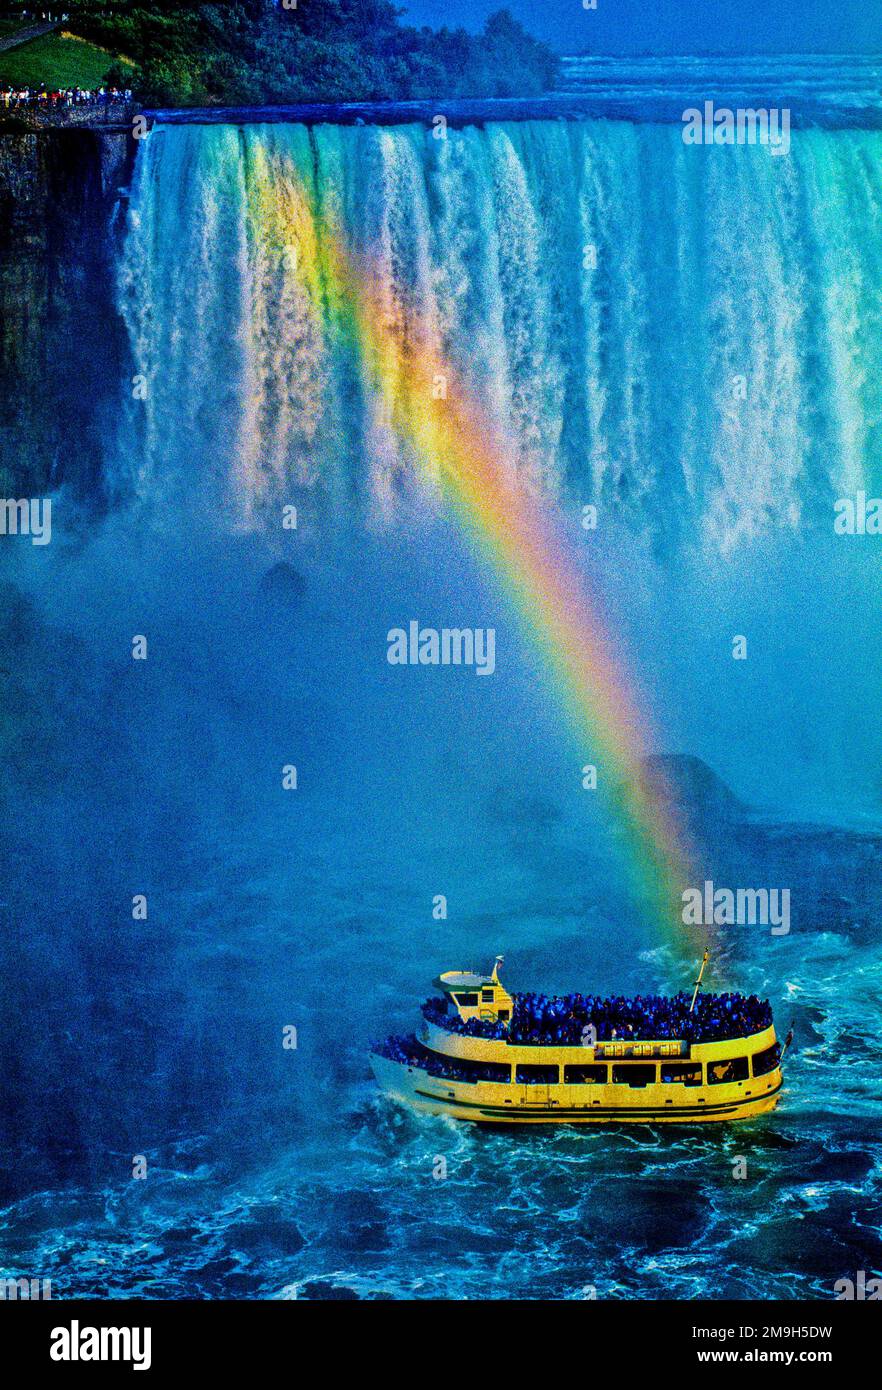 Cascate del Niagara, tourboat e arcobaleno, New York state, USA Foto Stock